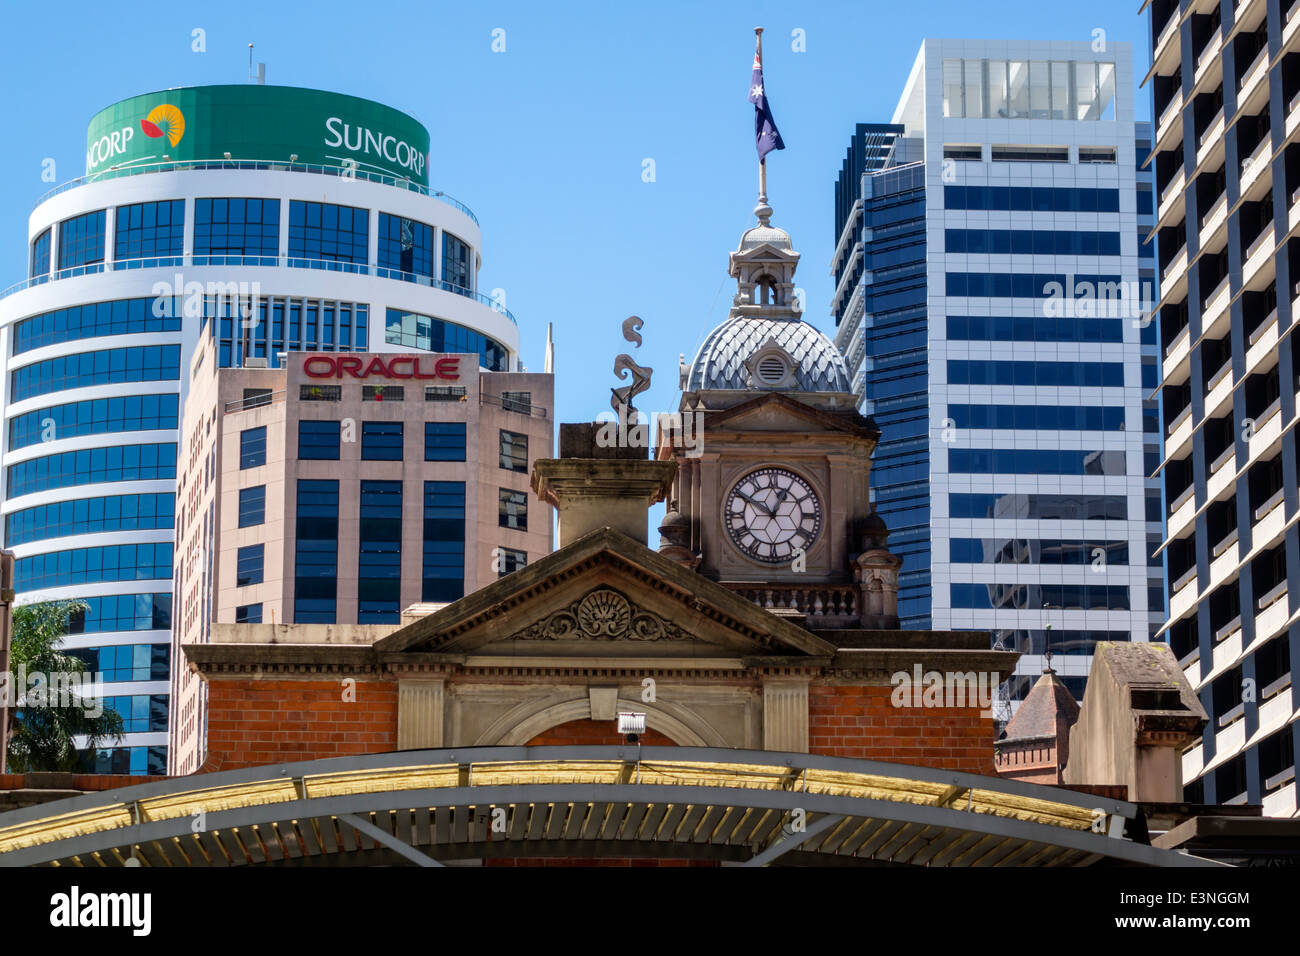 Brisbane Australia,Central Railway Station,building,modern high rise,office,Oracle,Suncorp,skyscrapers,city skyline,AU140316033 Stock Photo